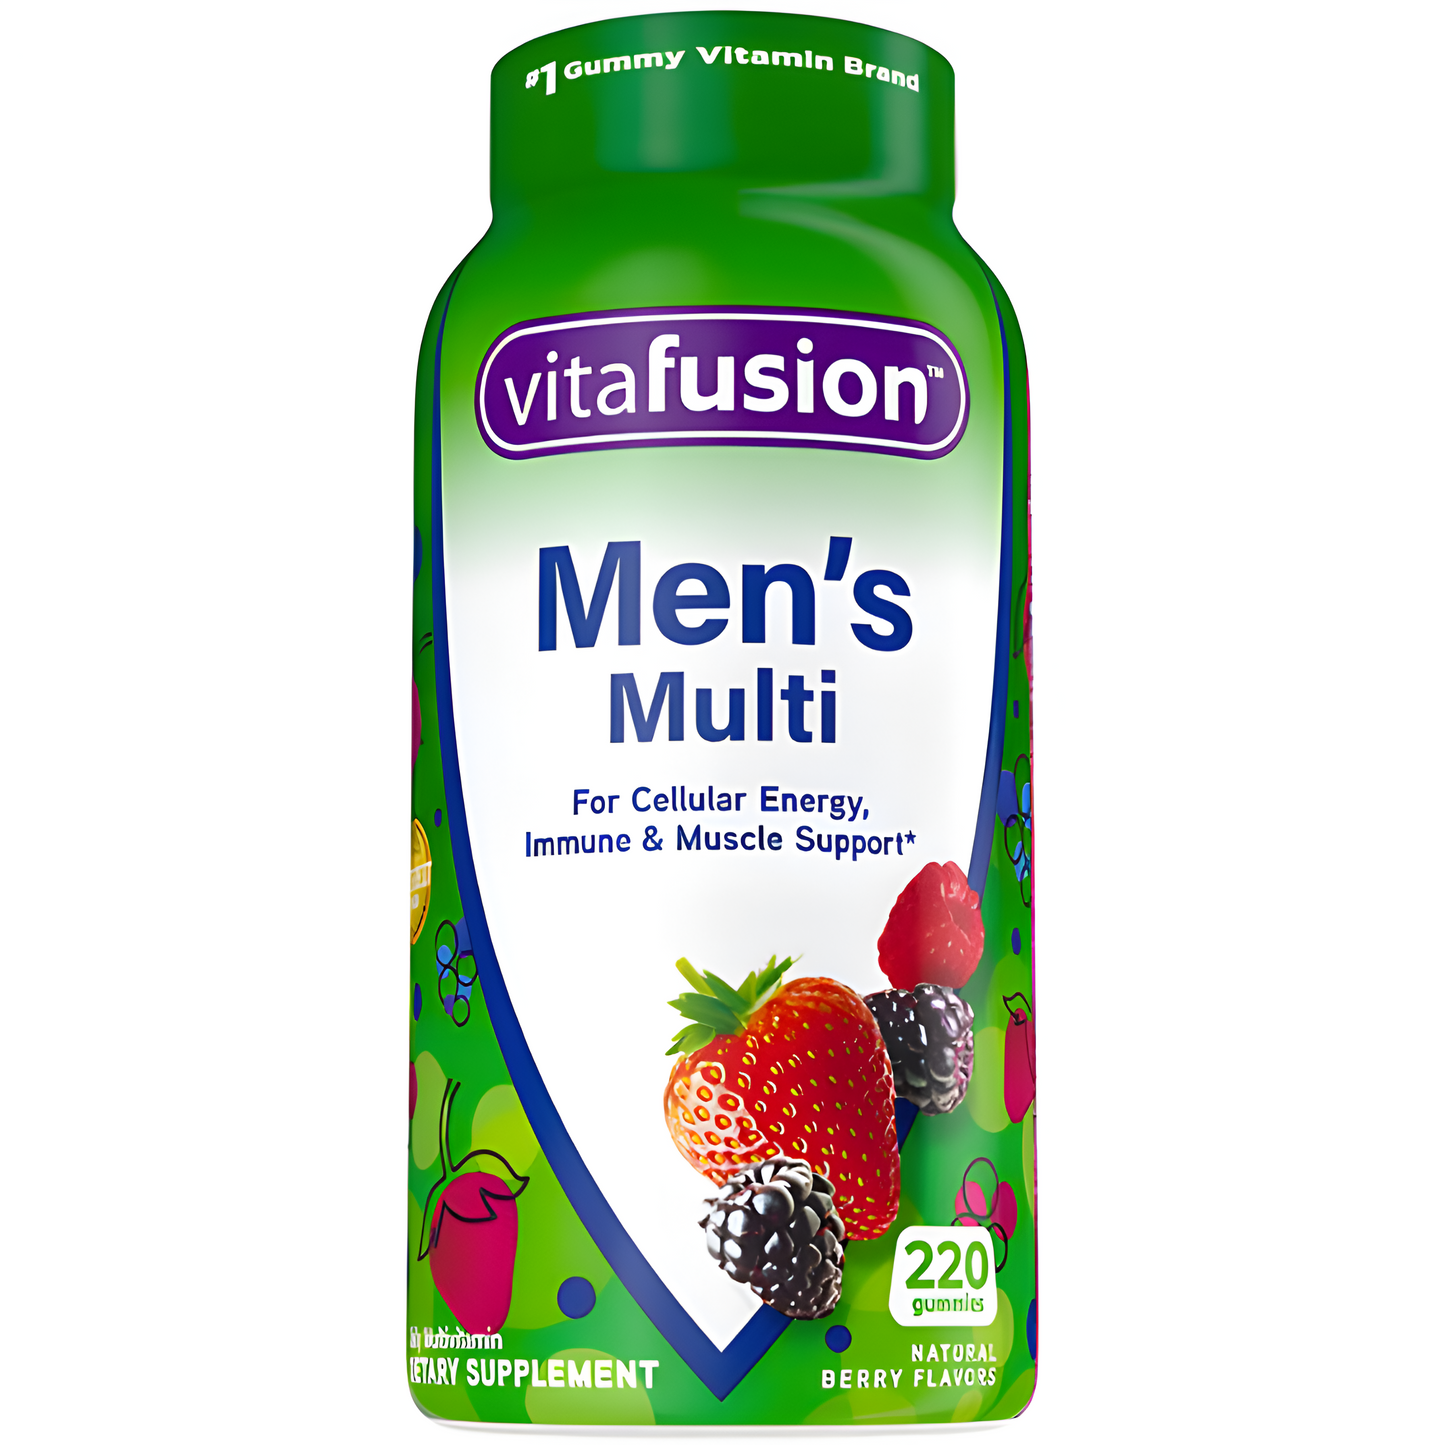 VitaFusion Men's Multivitaminico 220 gomitas